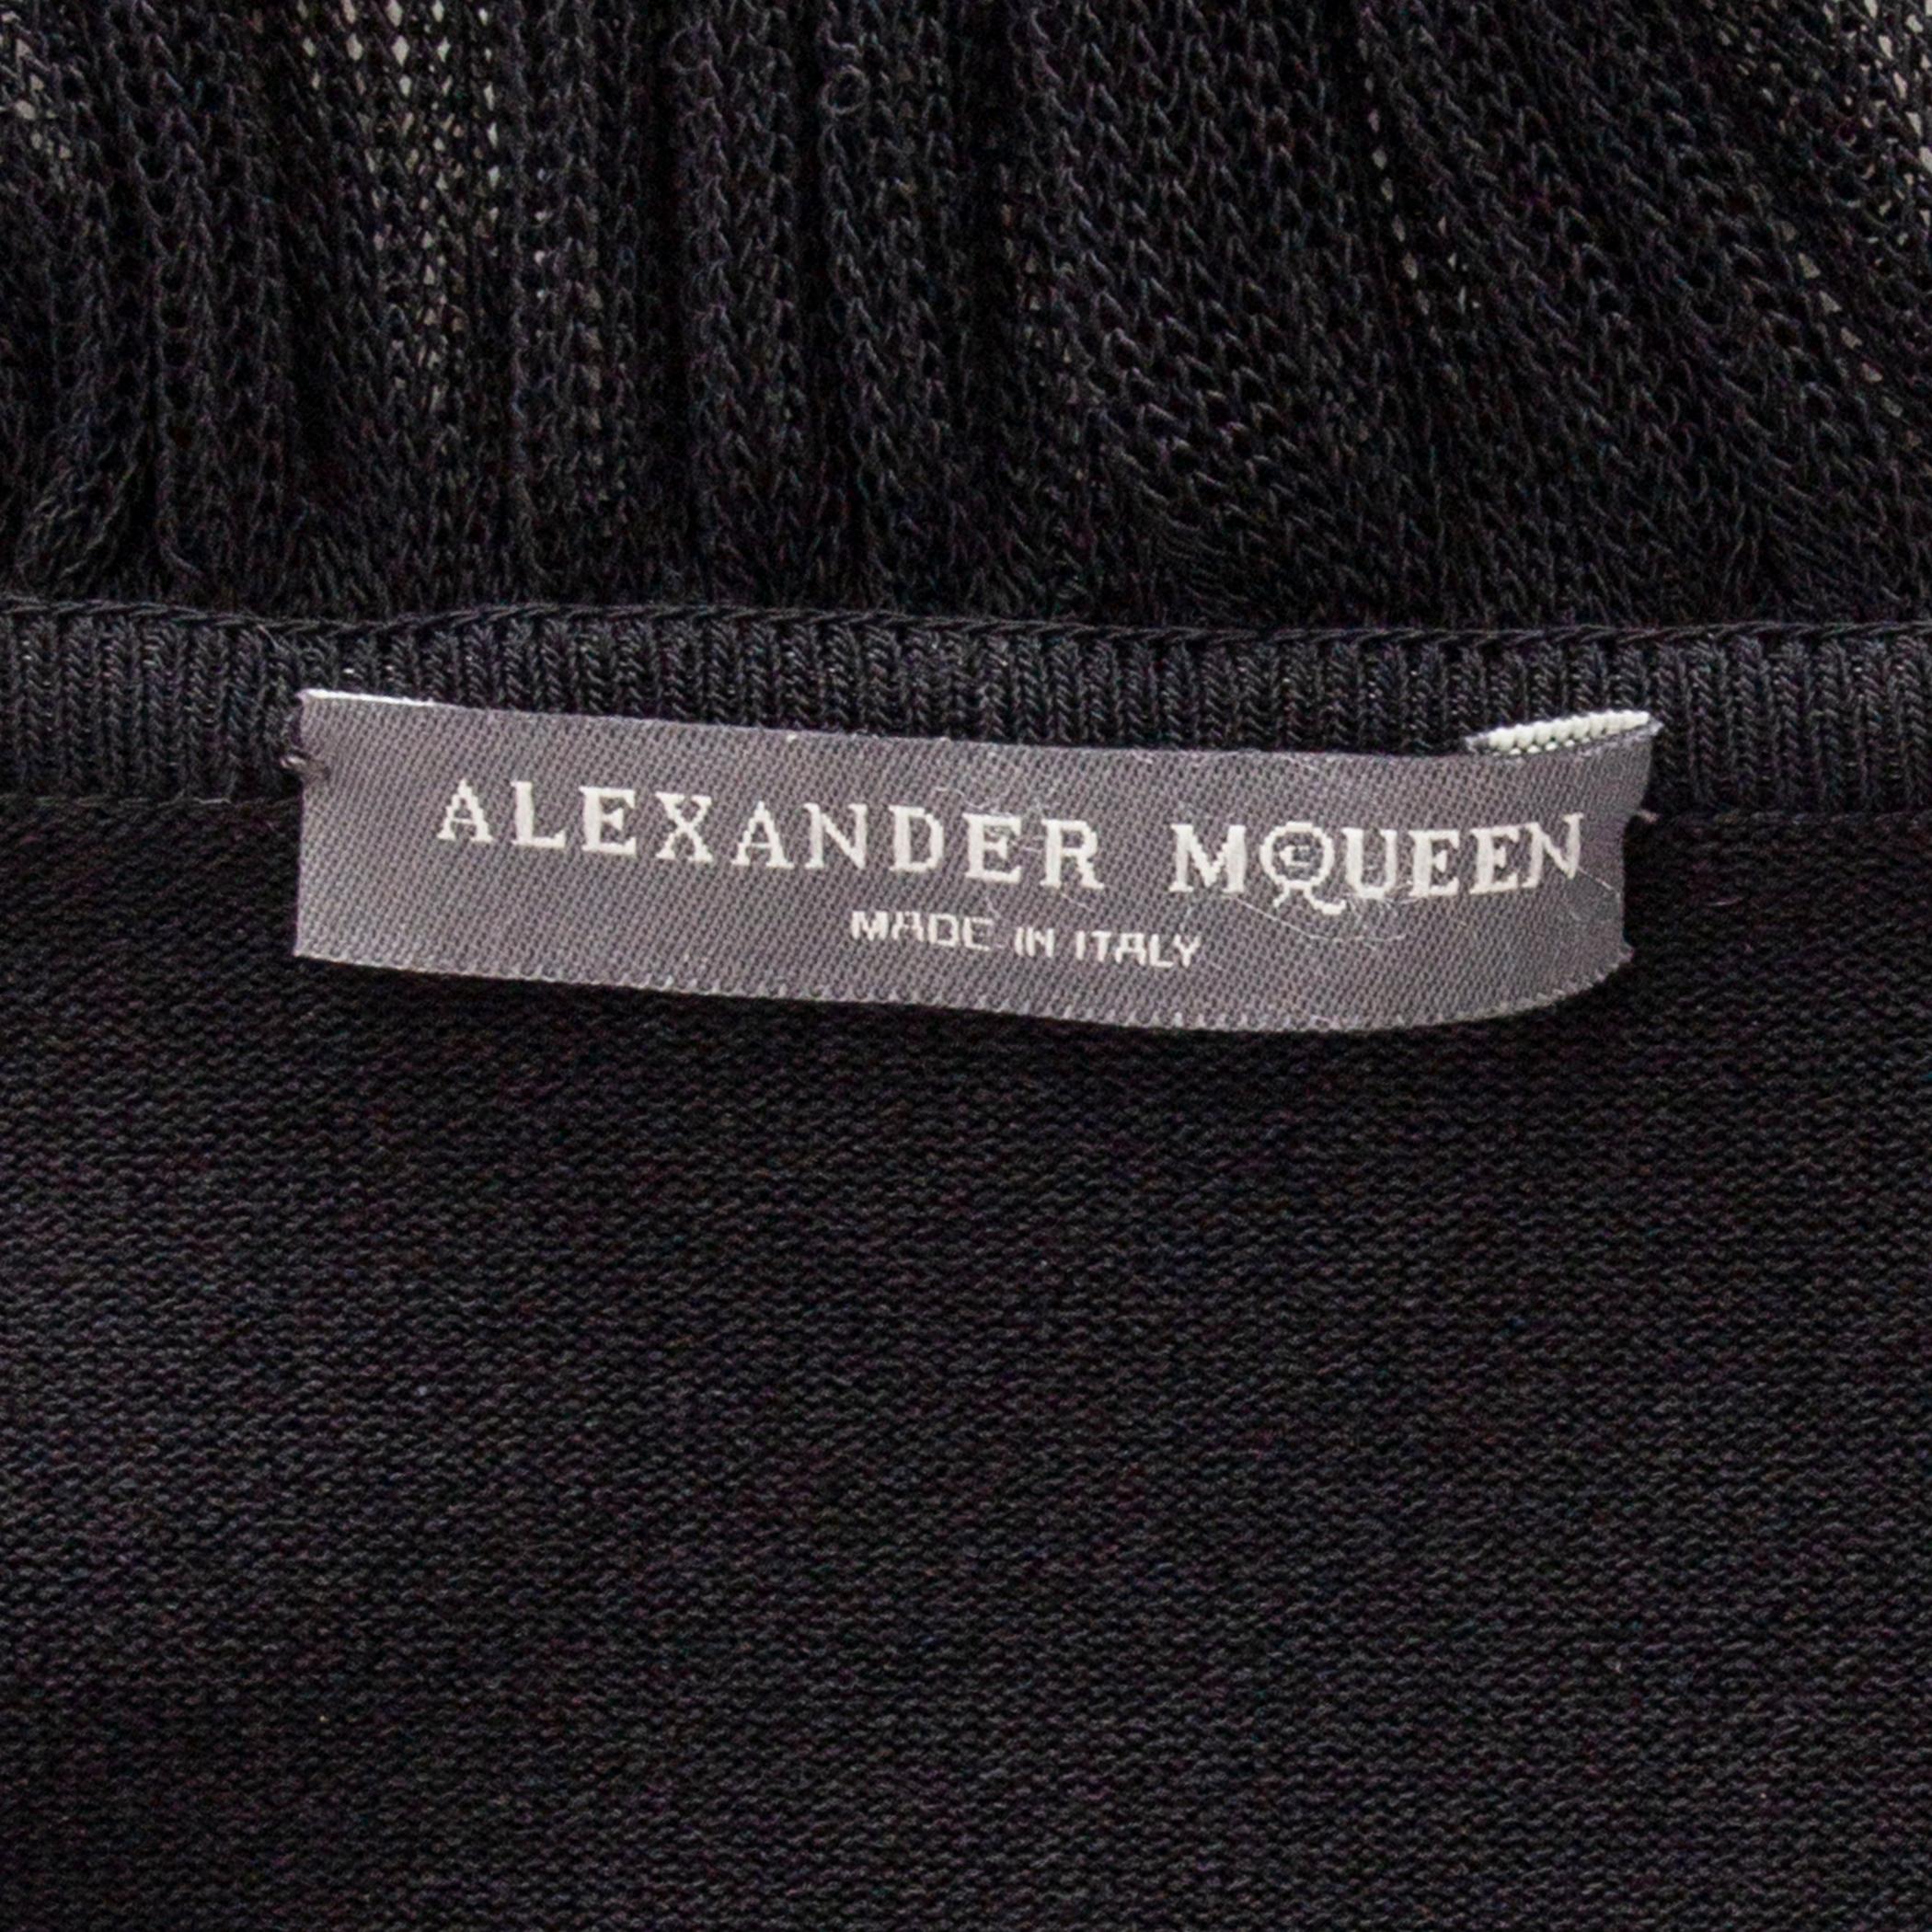 Black ALEXANDER MCQUEEN black RUFFLE COLLAR Cardigan Sweater L